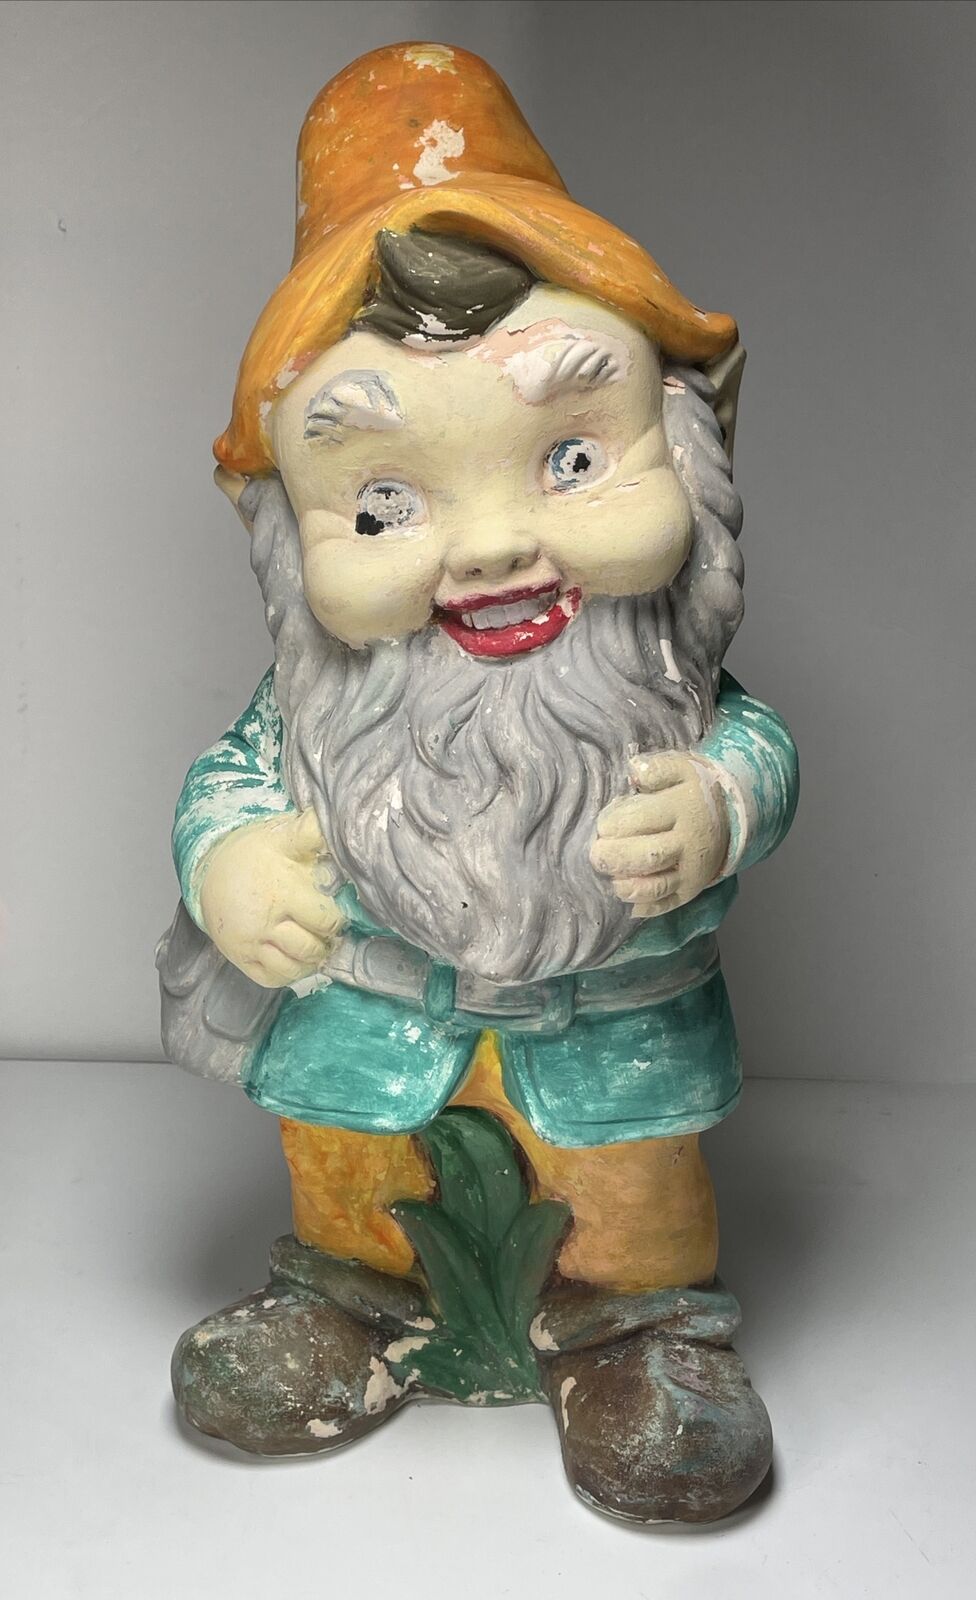 Knome Gnome Vintage 1960’s Rare German Made Ceramic Gnome Garden Figure 16.5”